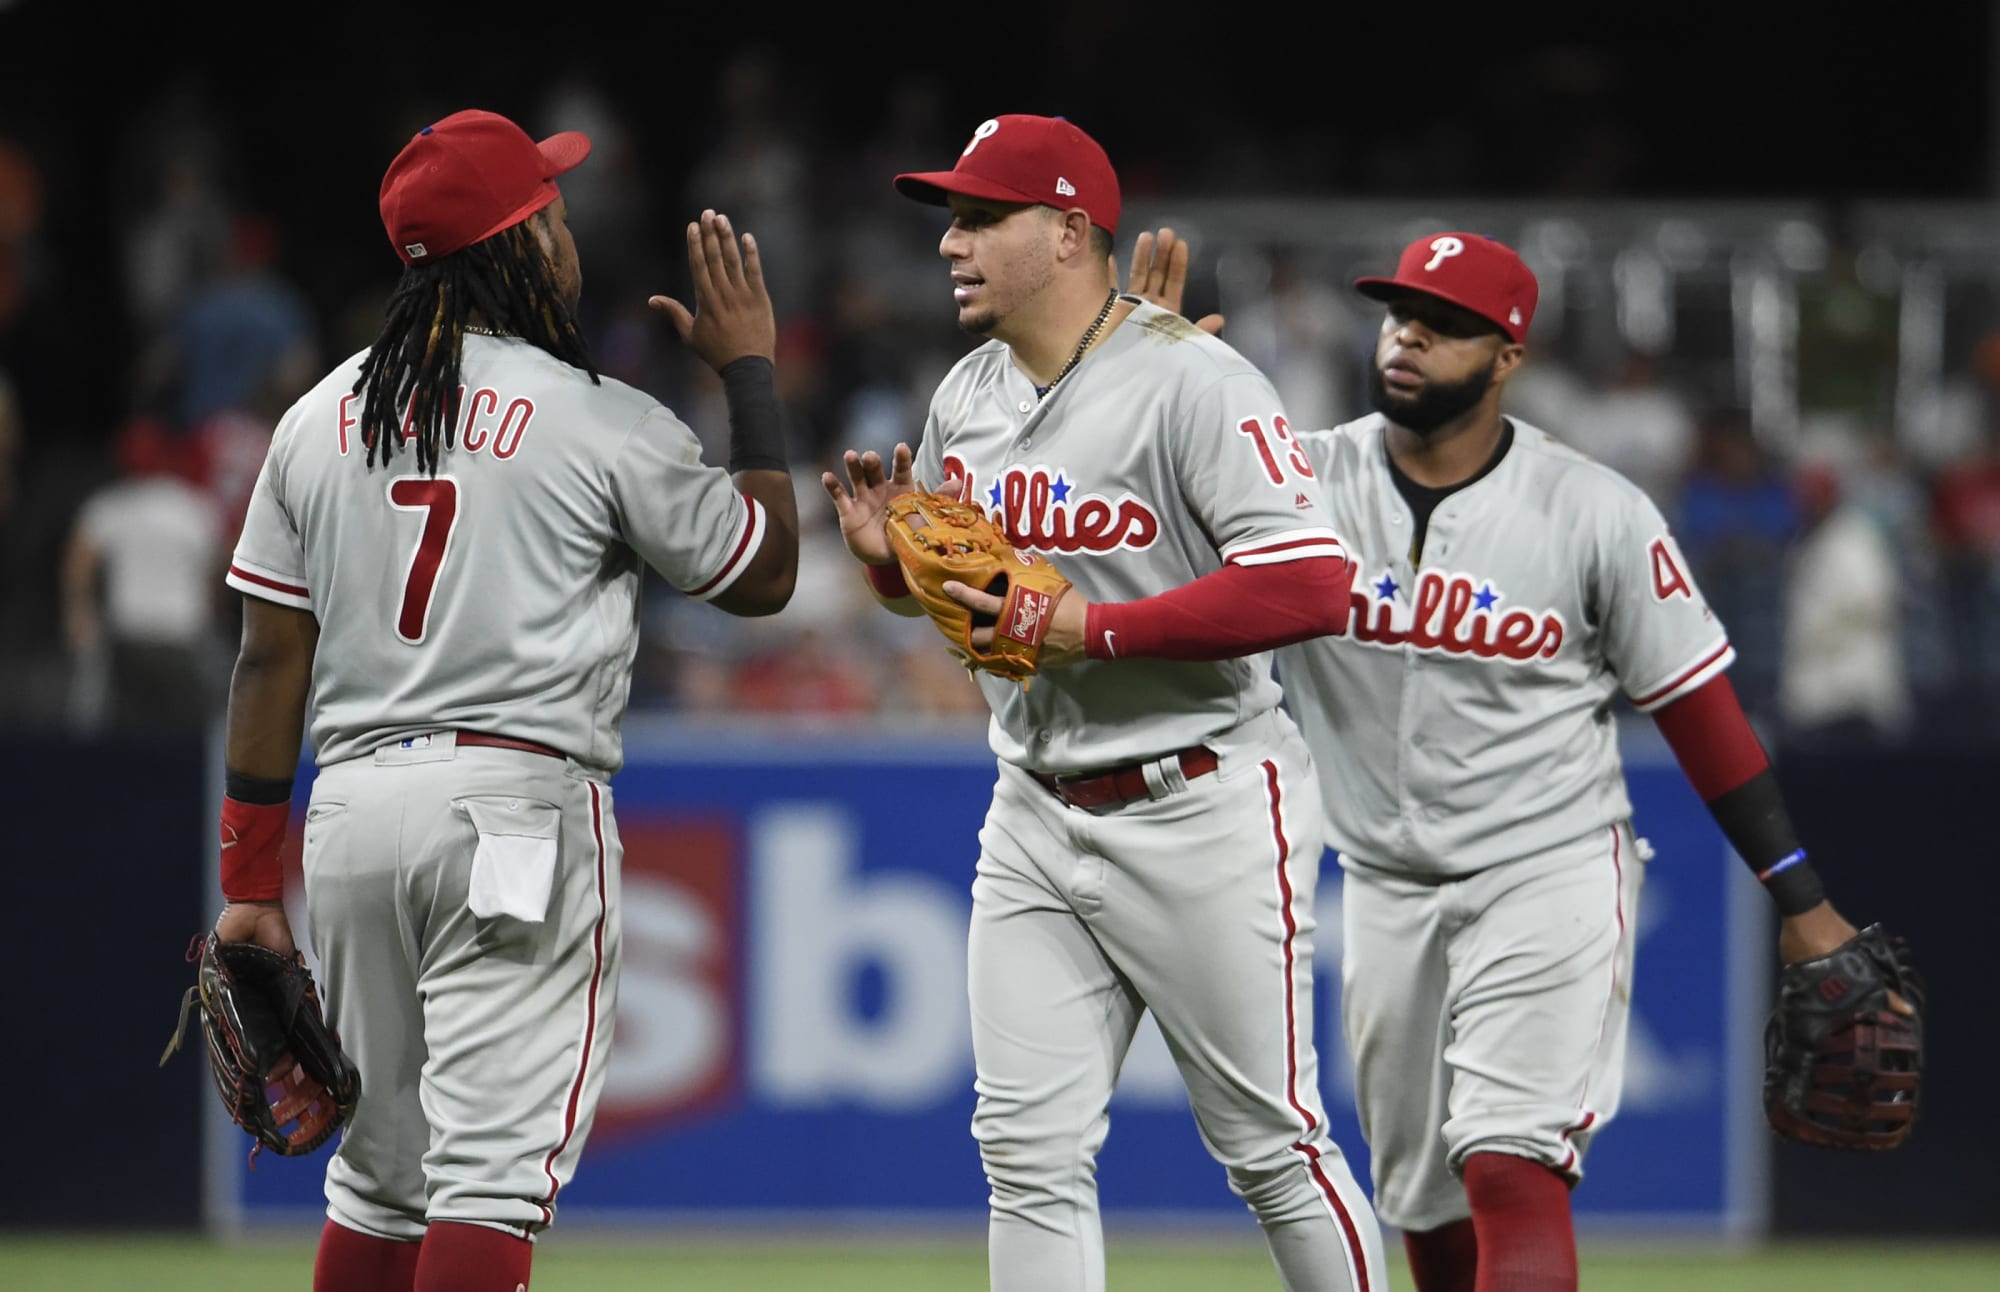 Phillies: Scott Kingery needs major improvement to take over third base